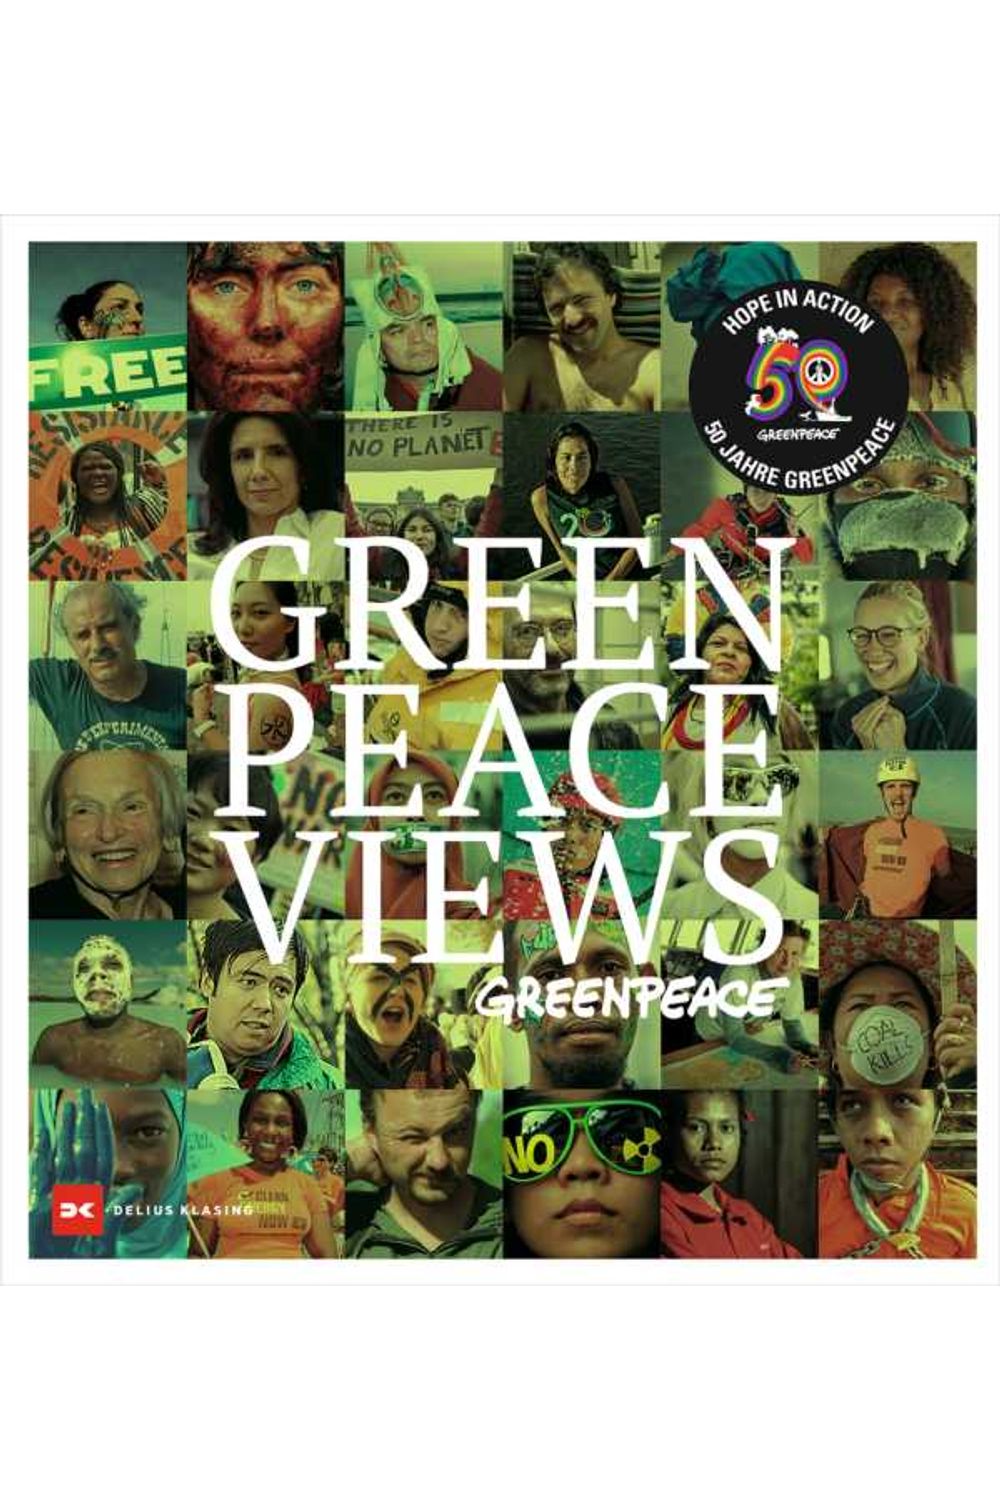 bw-greenpeace-views-delius-klasing-verlag-9783667124777